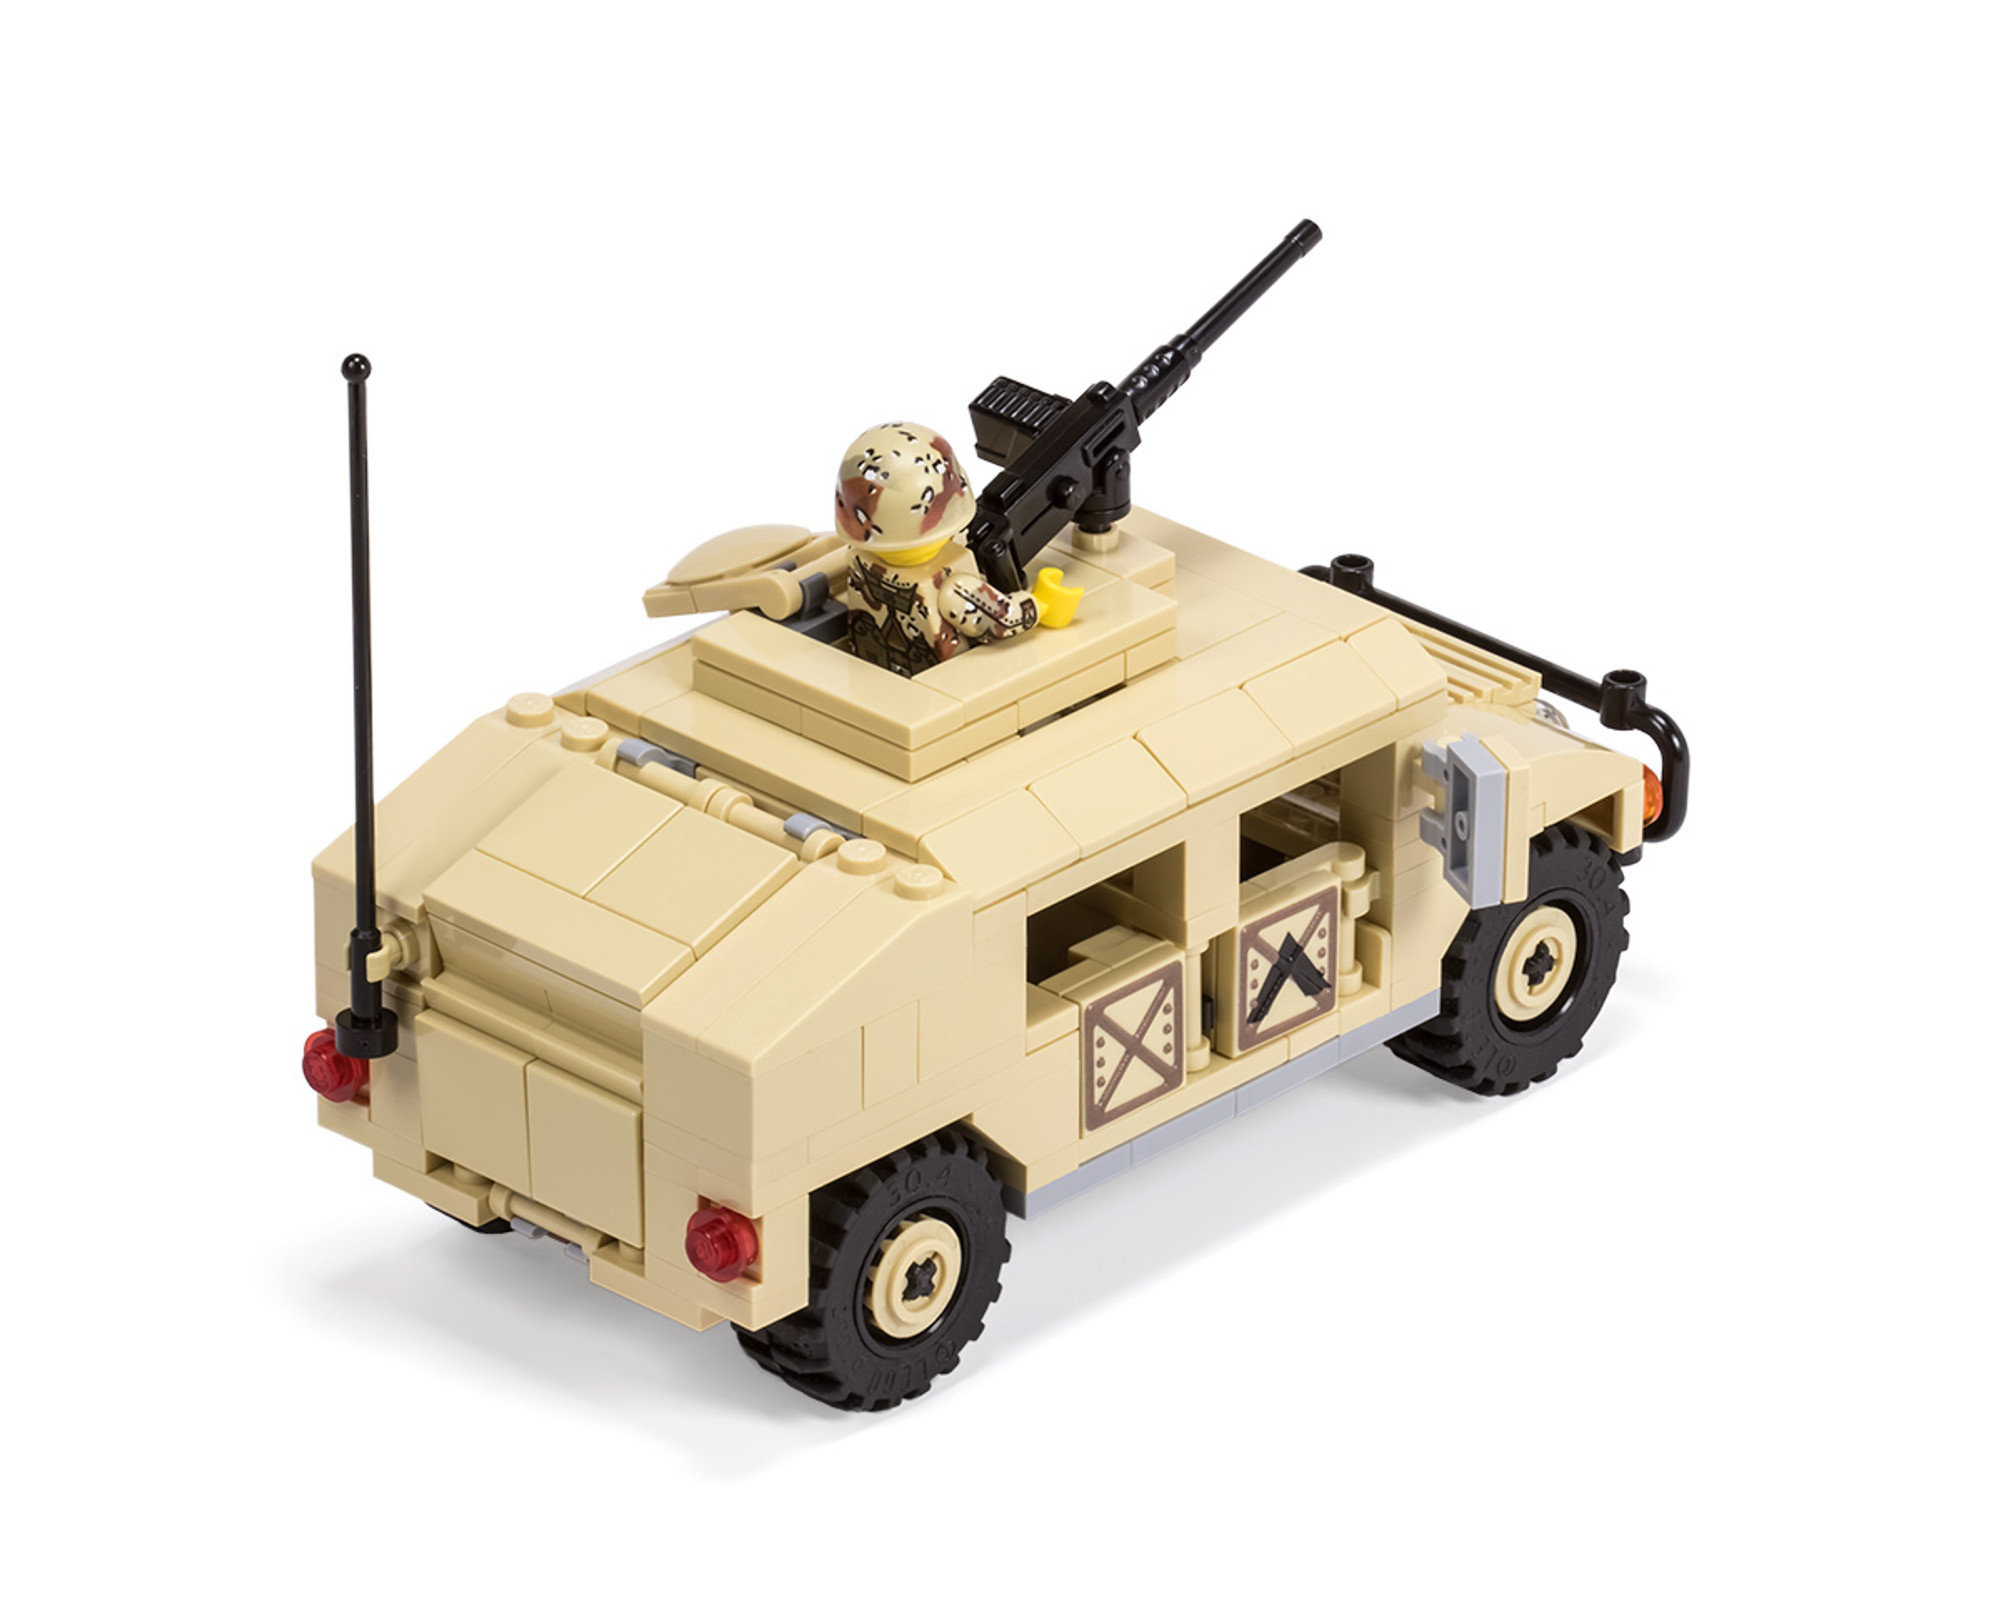 M1025 HMMWV - 4x4 Utility Vehicle with M2HB Machine Gun